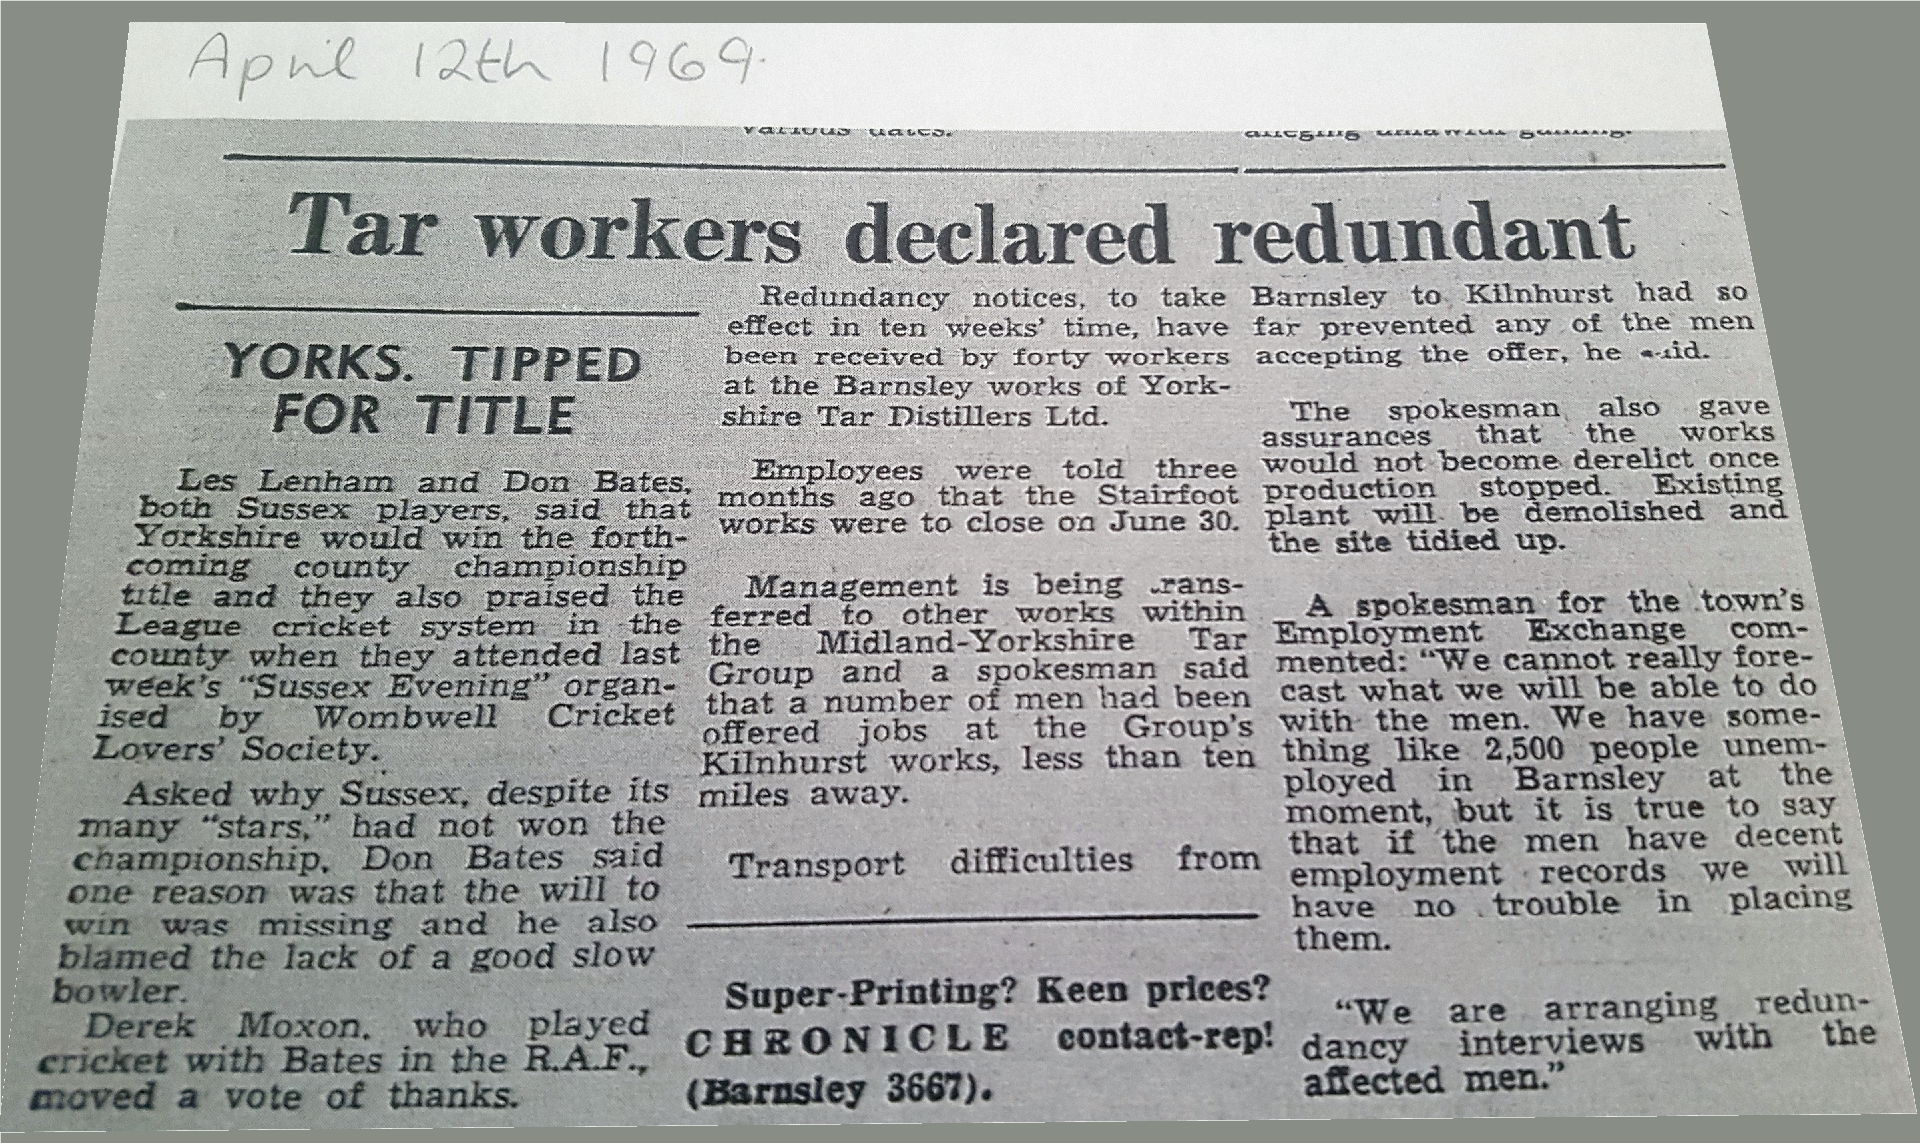 Tar Workers made Redundant April 1969